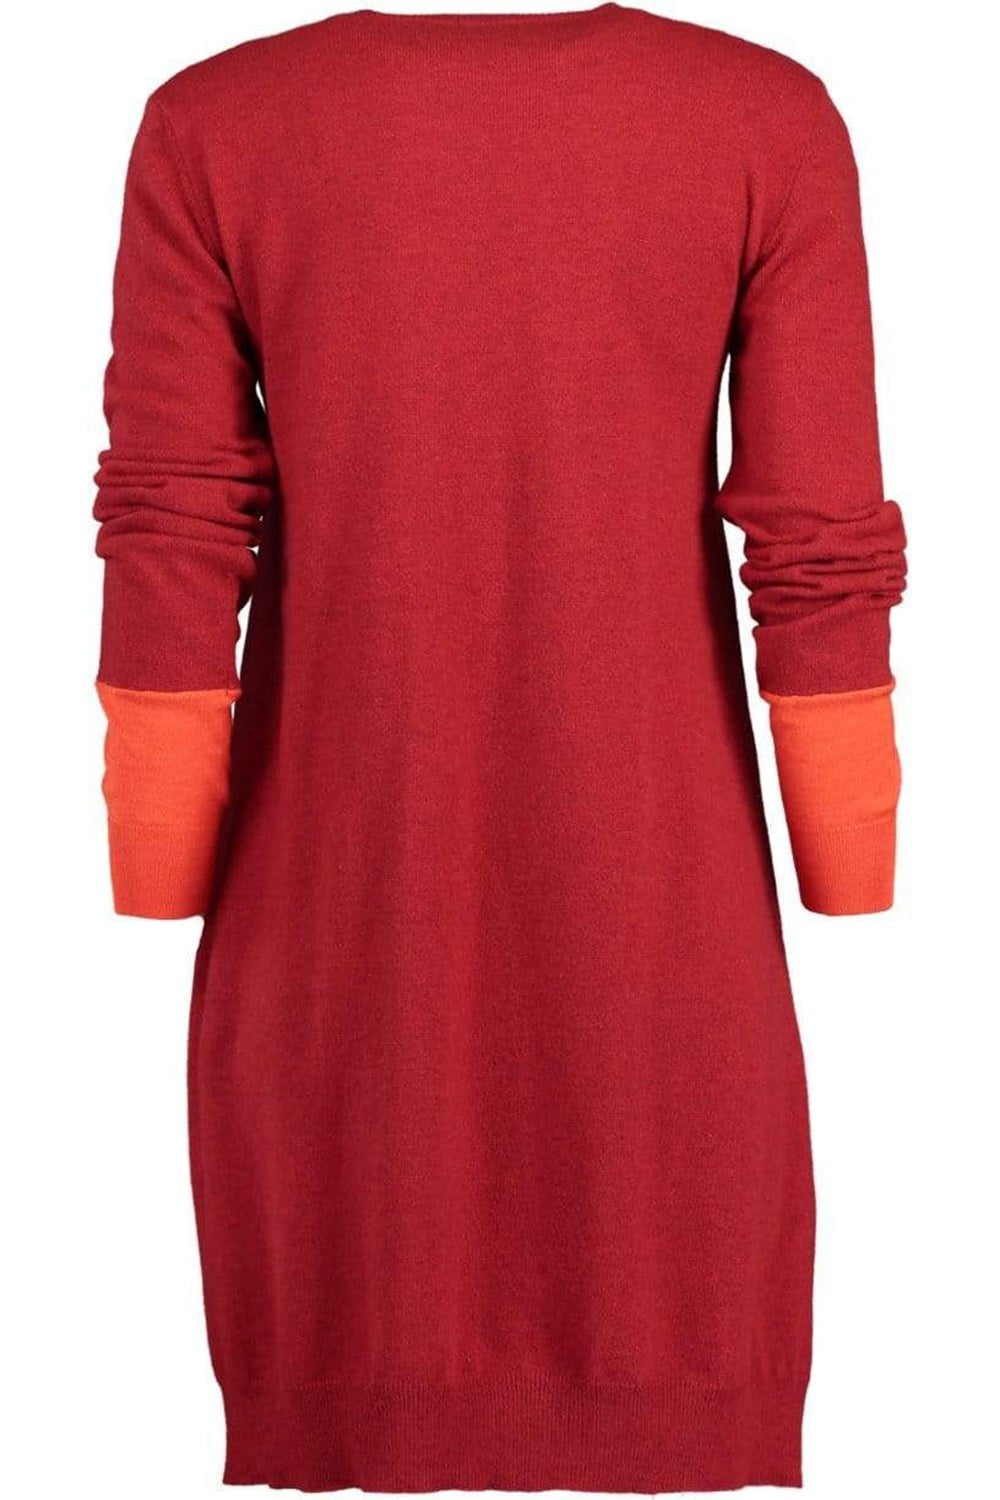 STELLA MCCARTNEY-Contrast Panel Knit Dress-RED